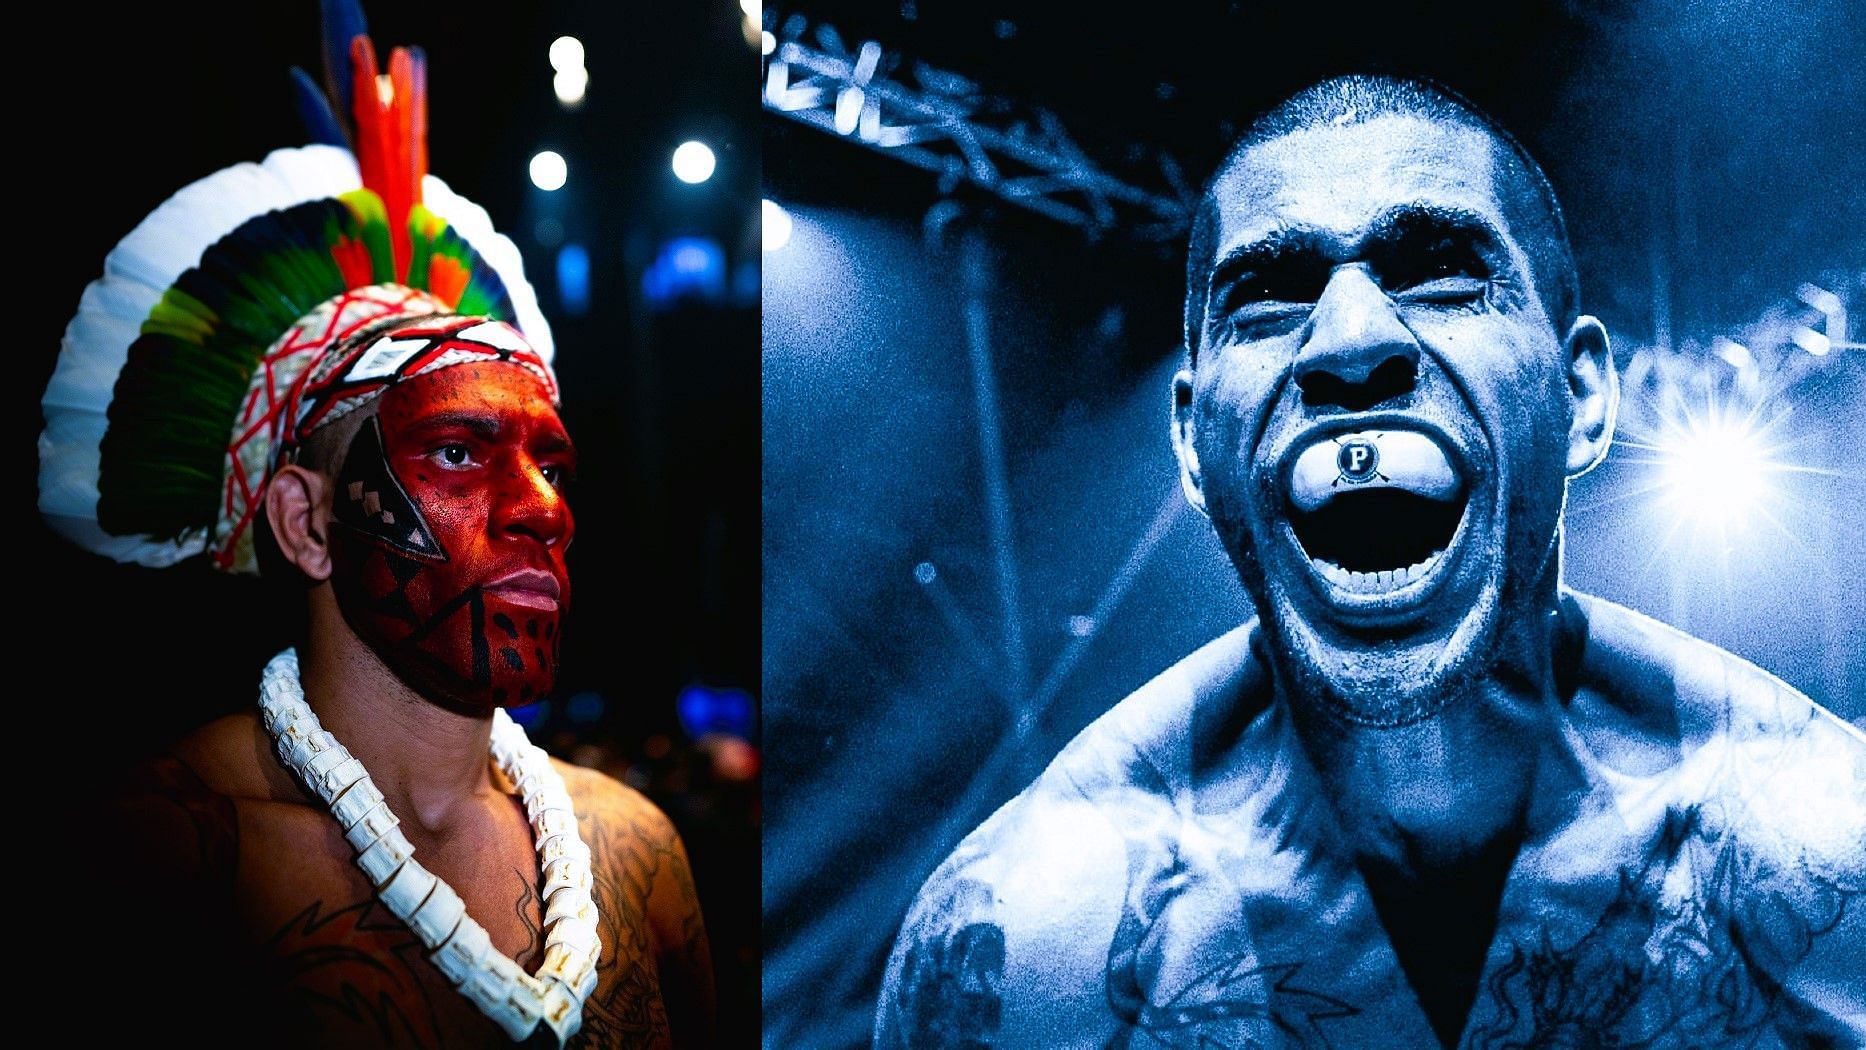 Alex Pereira in the UFC (left) and GLORY (right) [Images via @ufc &amp; @alexpoatanpereira on Instagram]